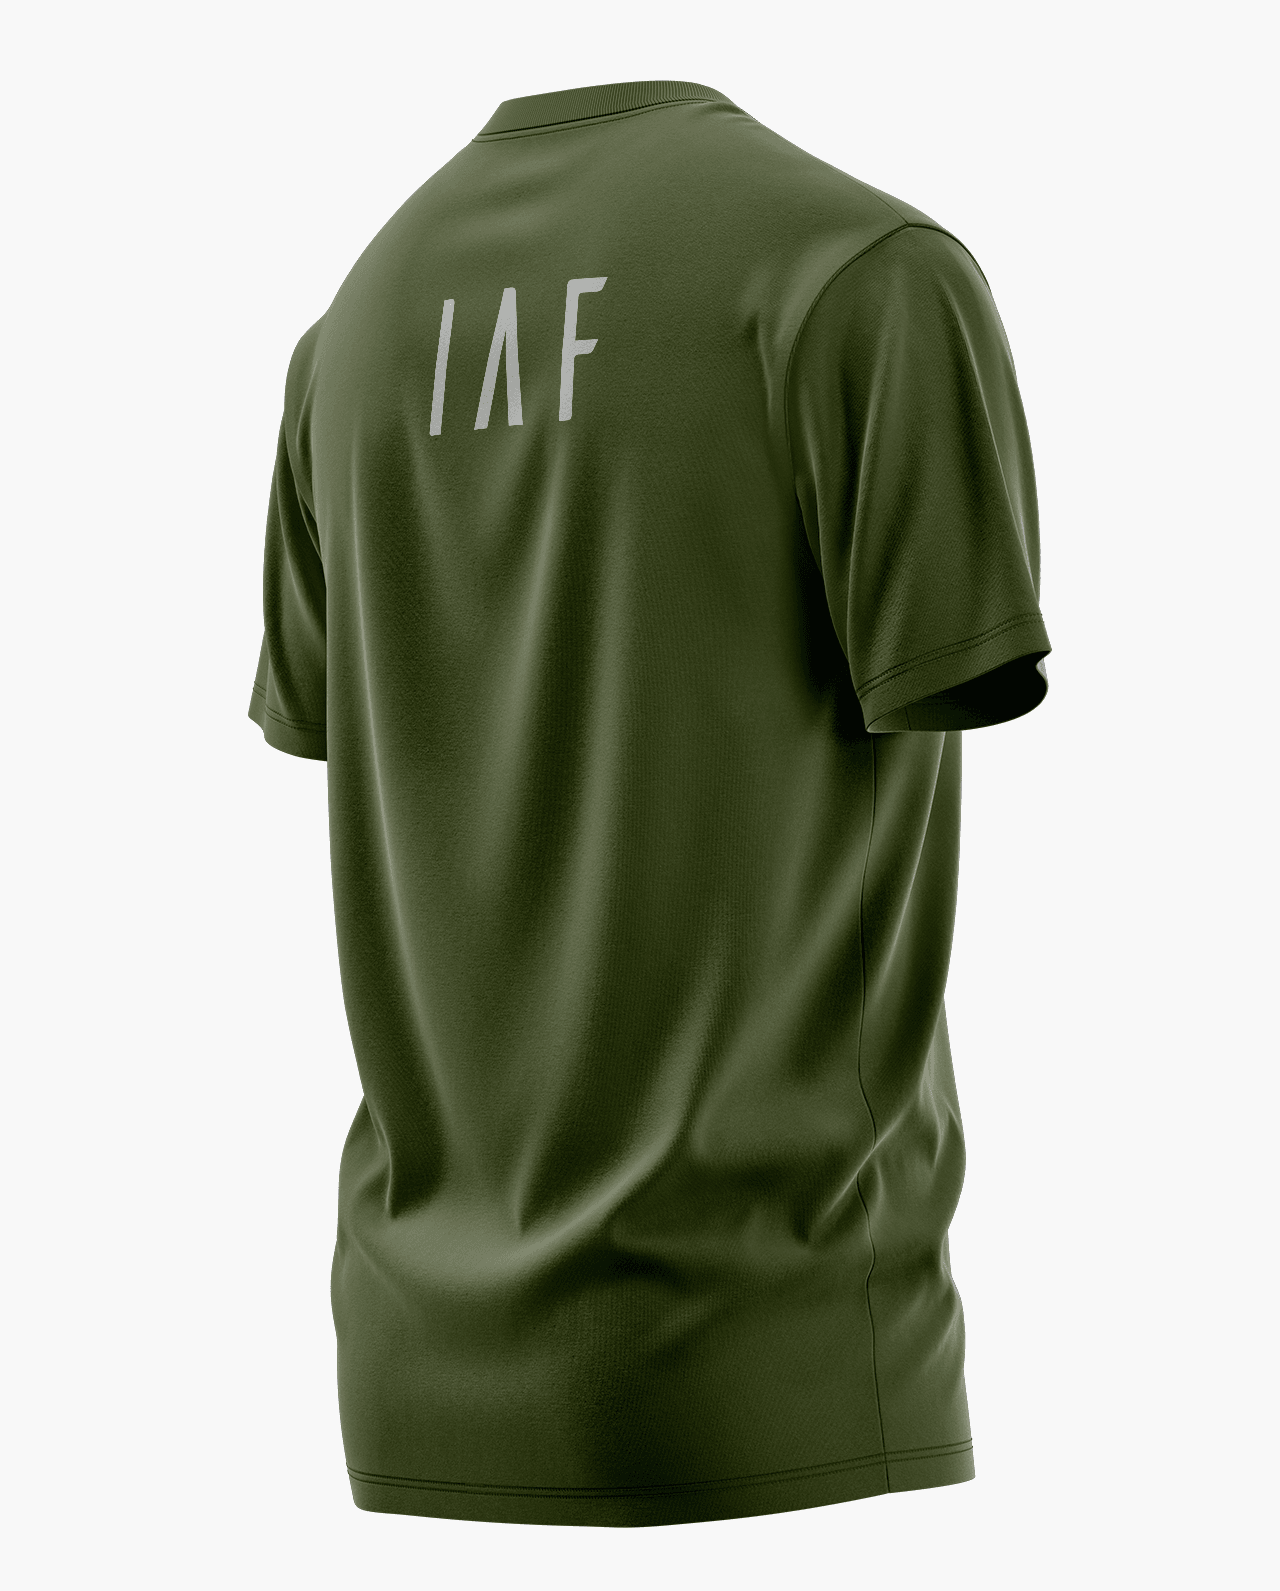 IAF Touch The Sky With Glory T-Shirt - Aero Armour